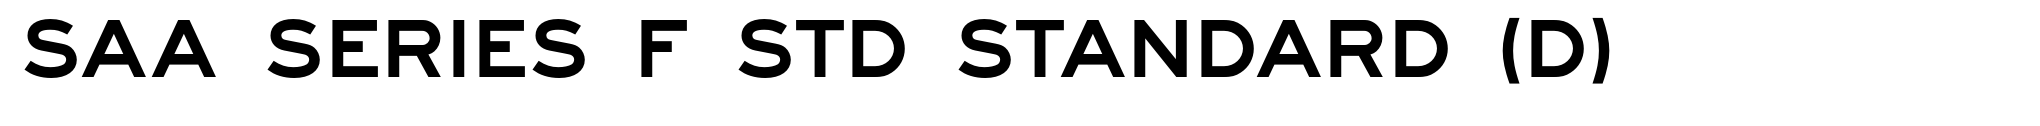 SAA Series F Std Standard (D) image